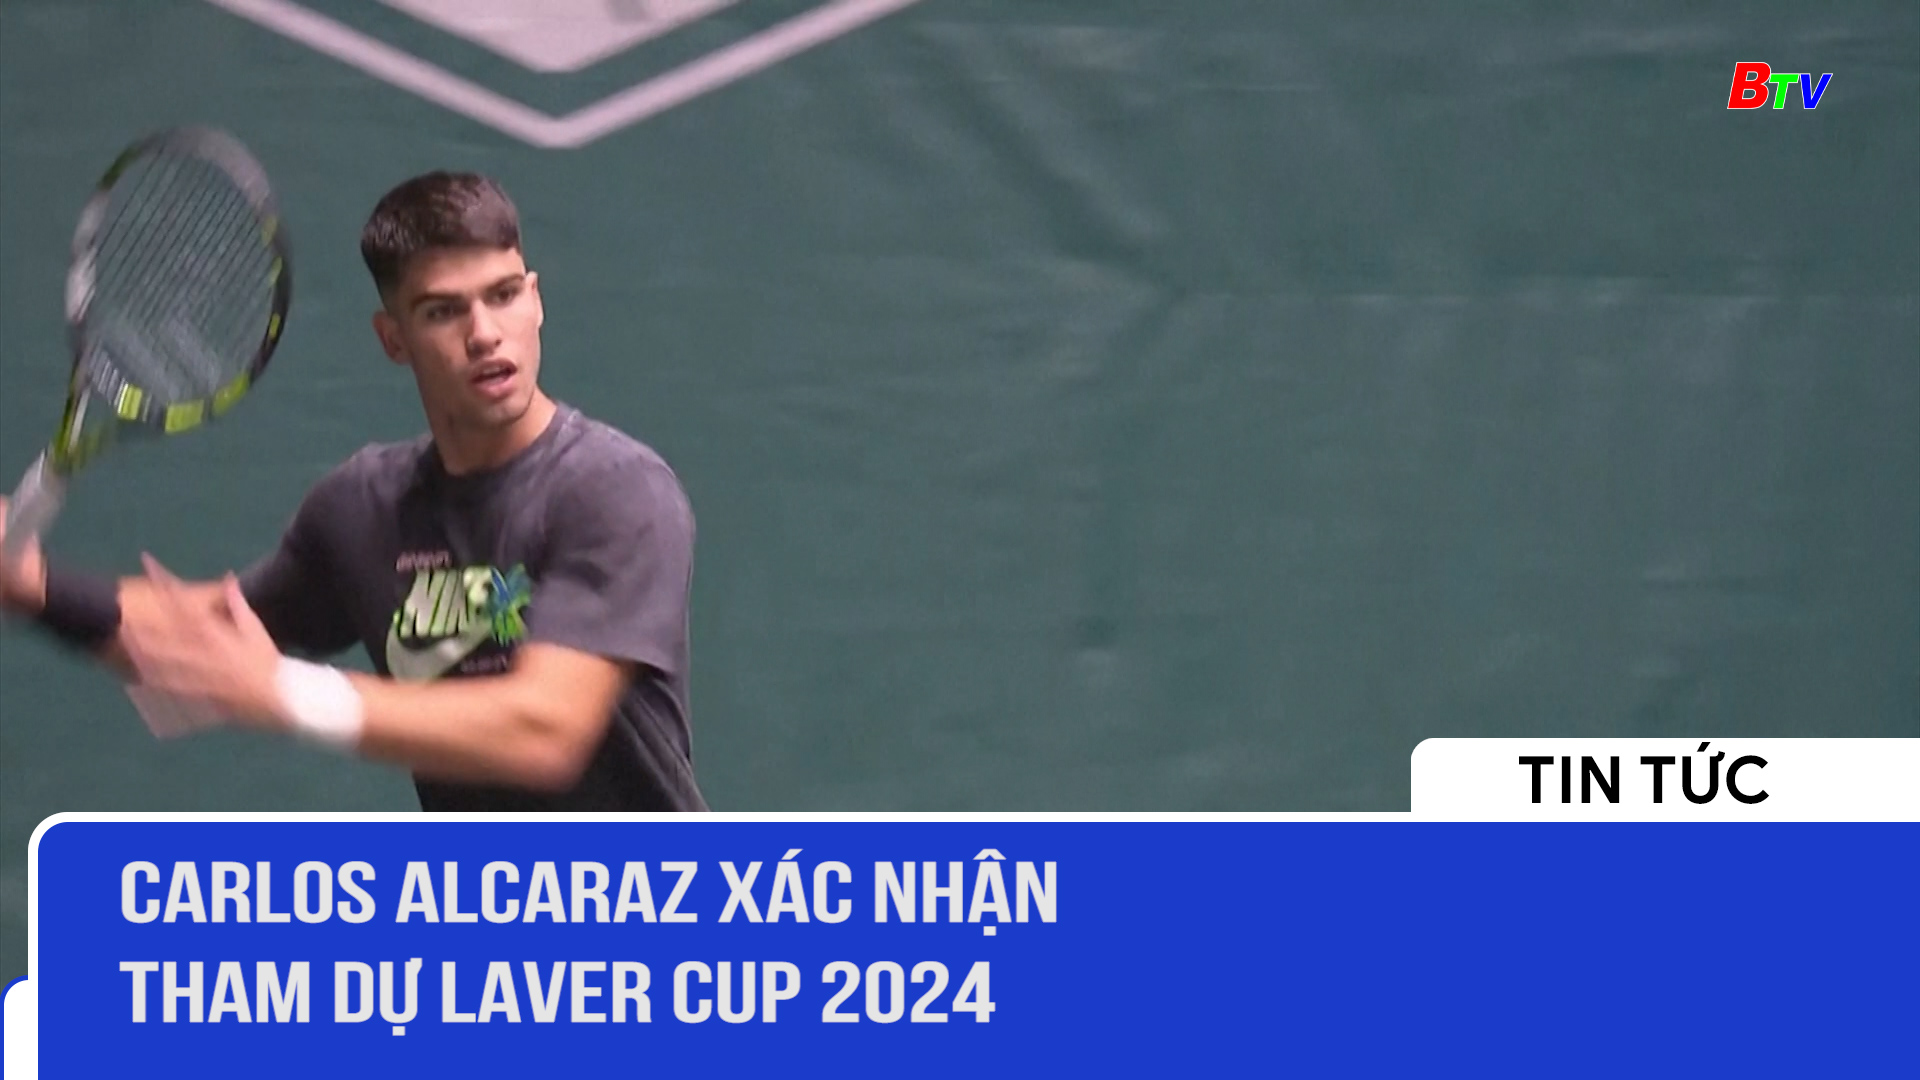 Carlos Alcaraz xác nhận tham dự Laver Cup 2024